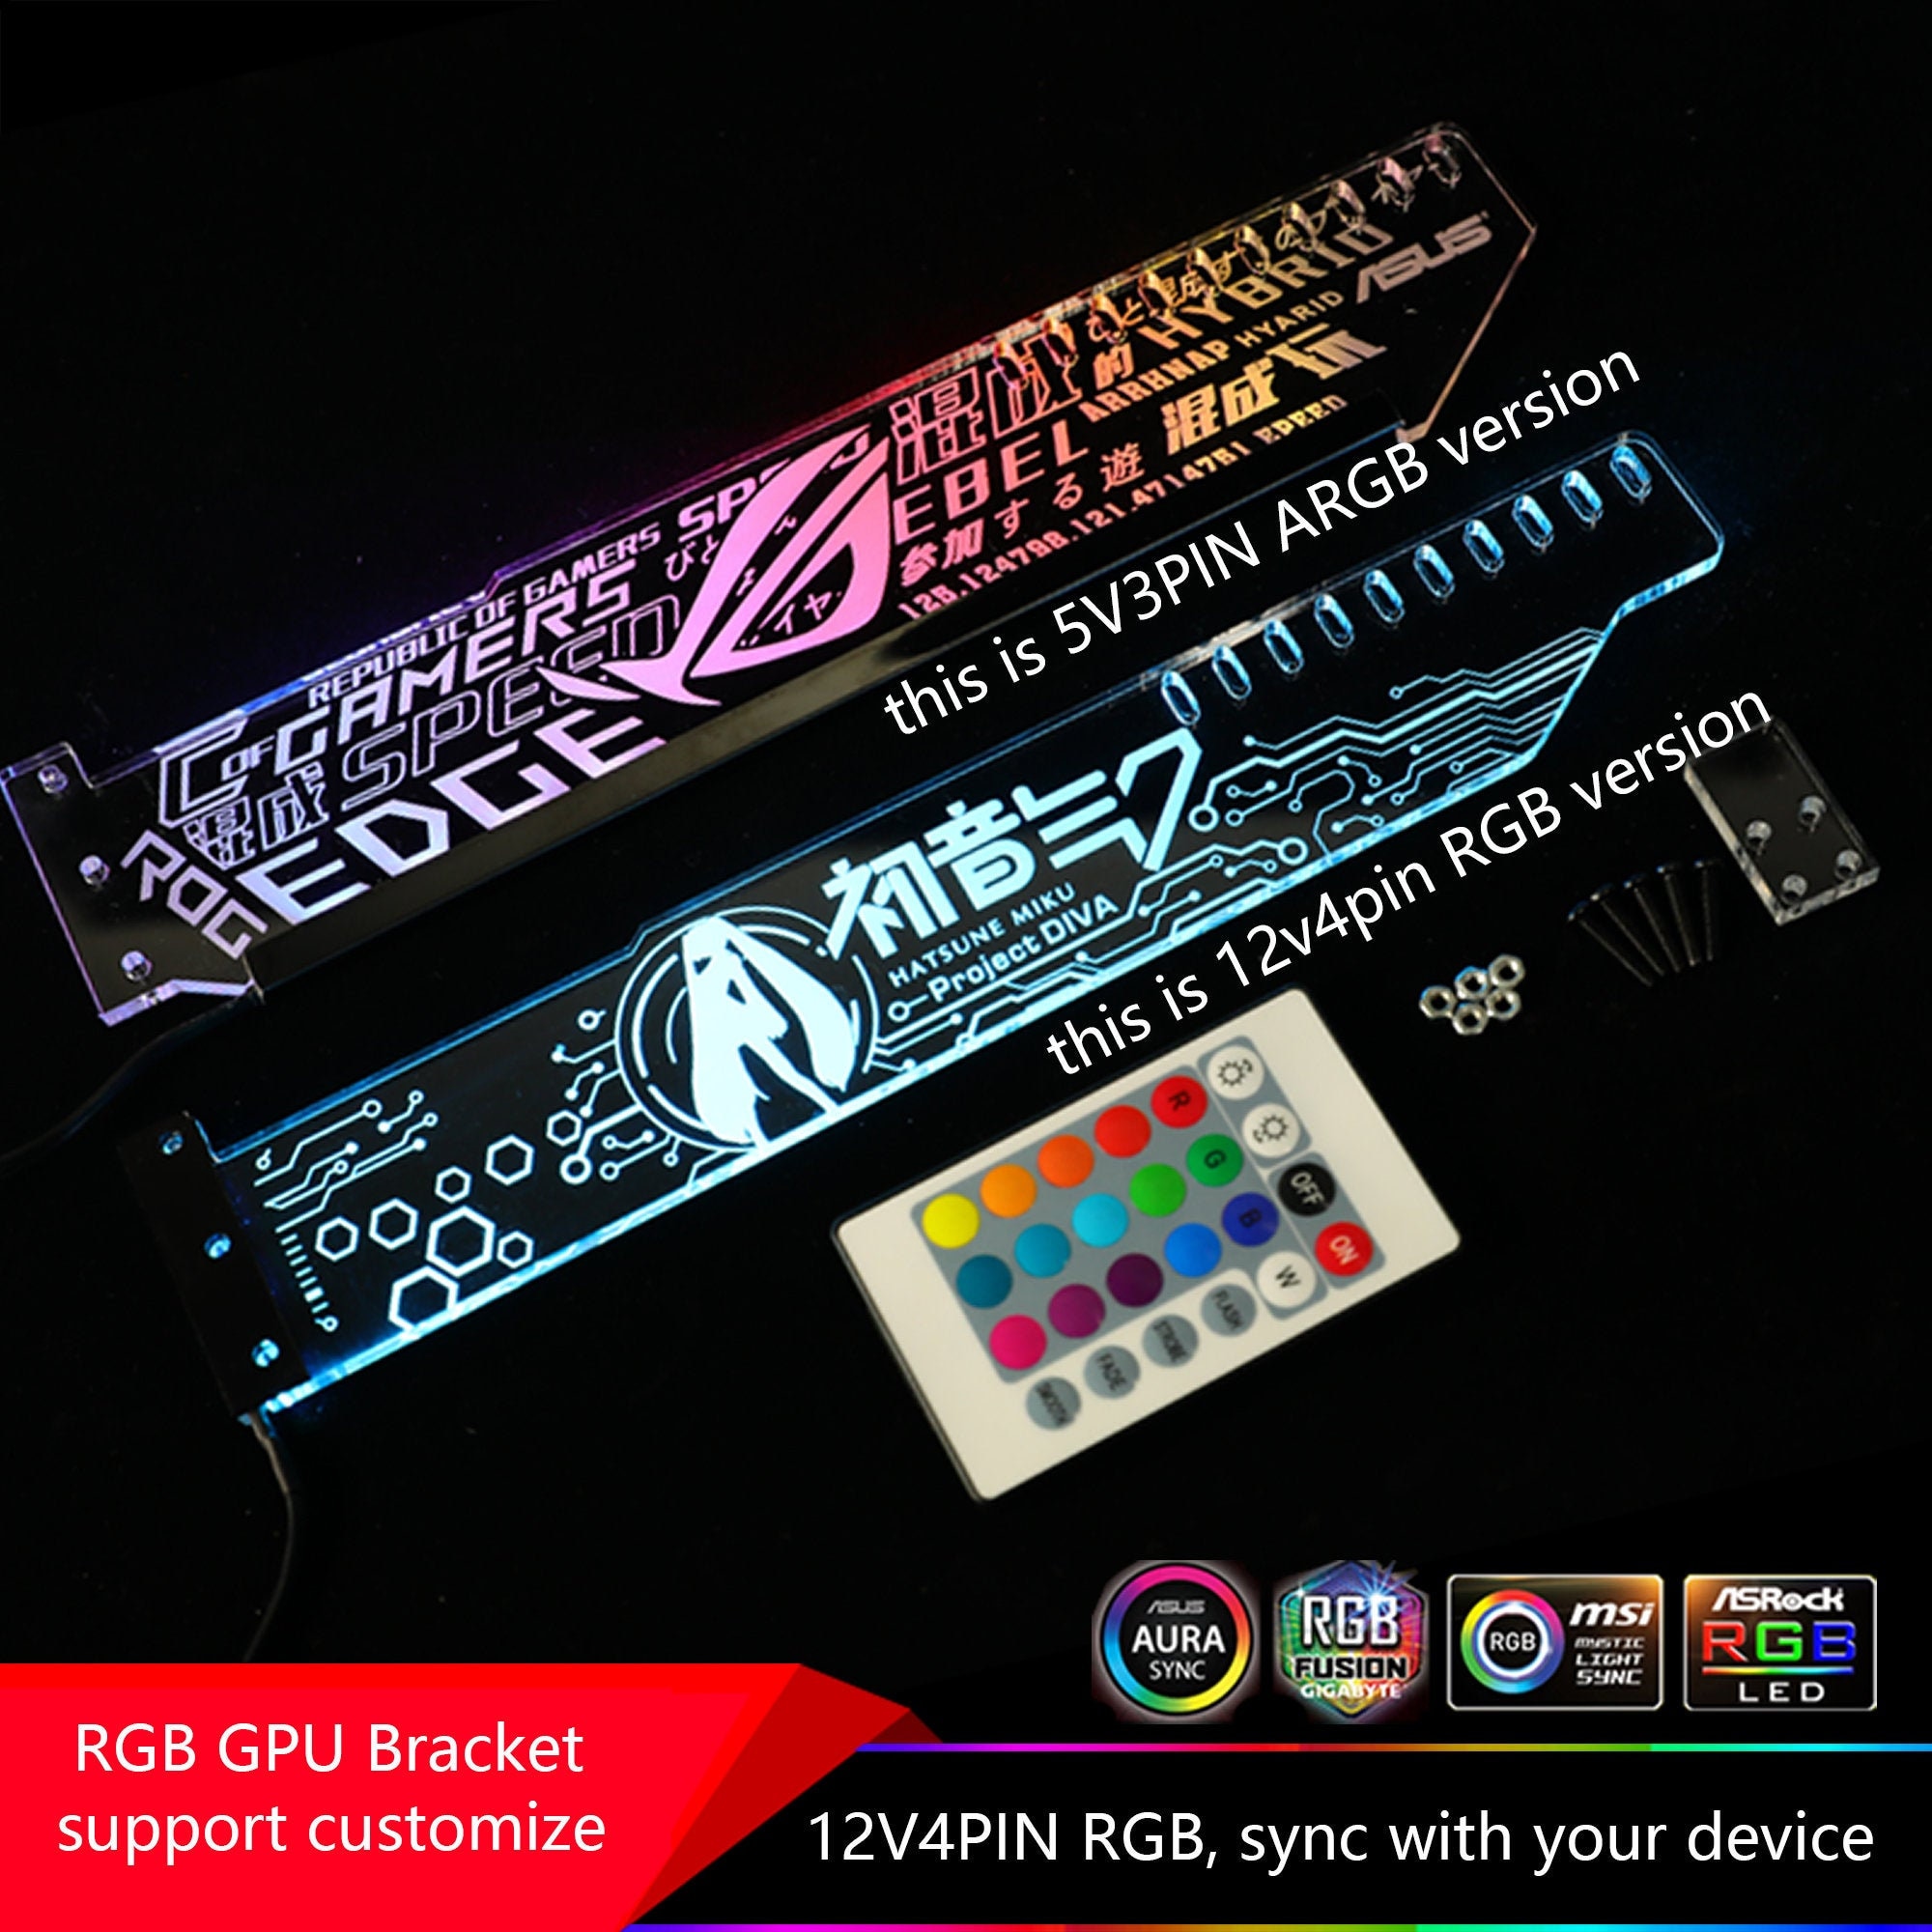 Framed Version Customized ARGB Light Panels for ASUS GR701 Case Rog HYPERION  Gaming Case Mod 5v3pin Eva 02 